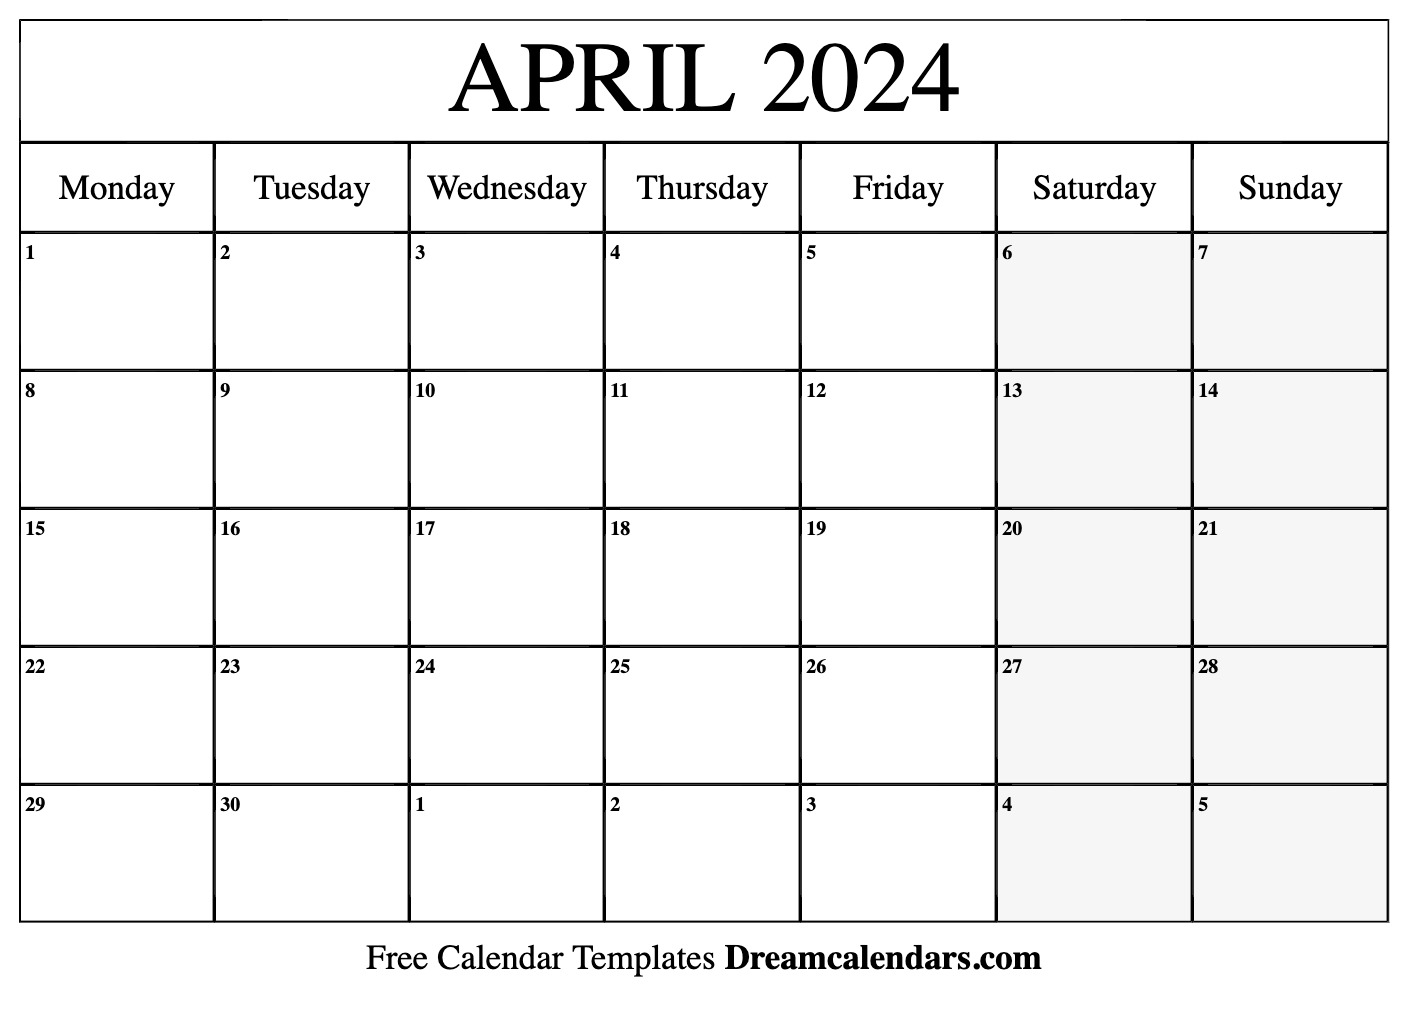 April Calendar 2024 Desktop New Awesome Review of January 2024